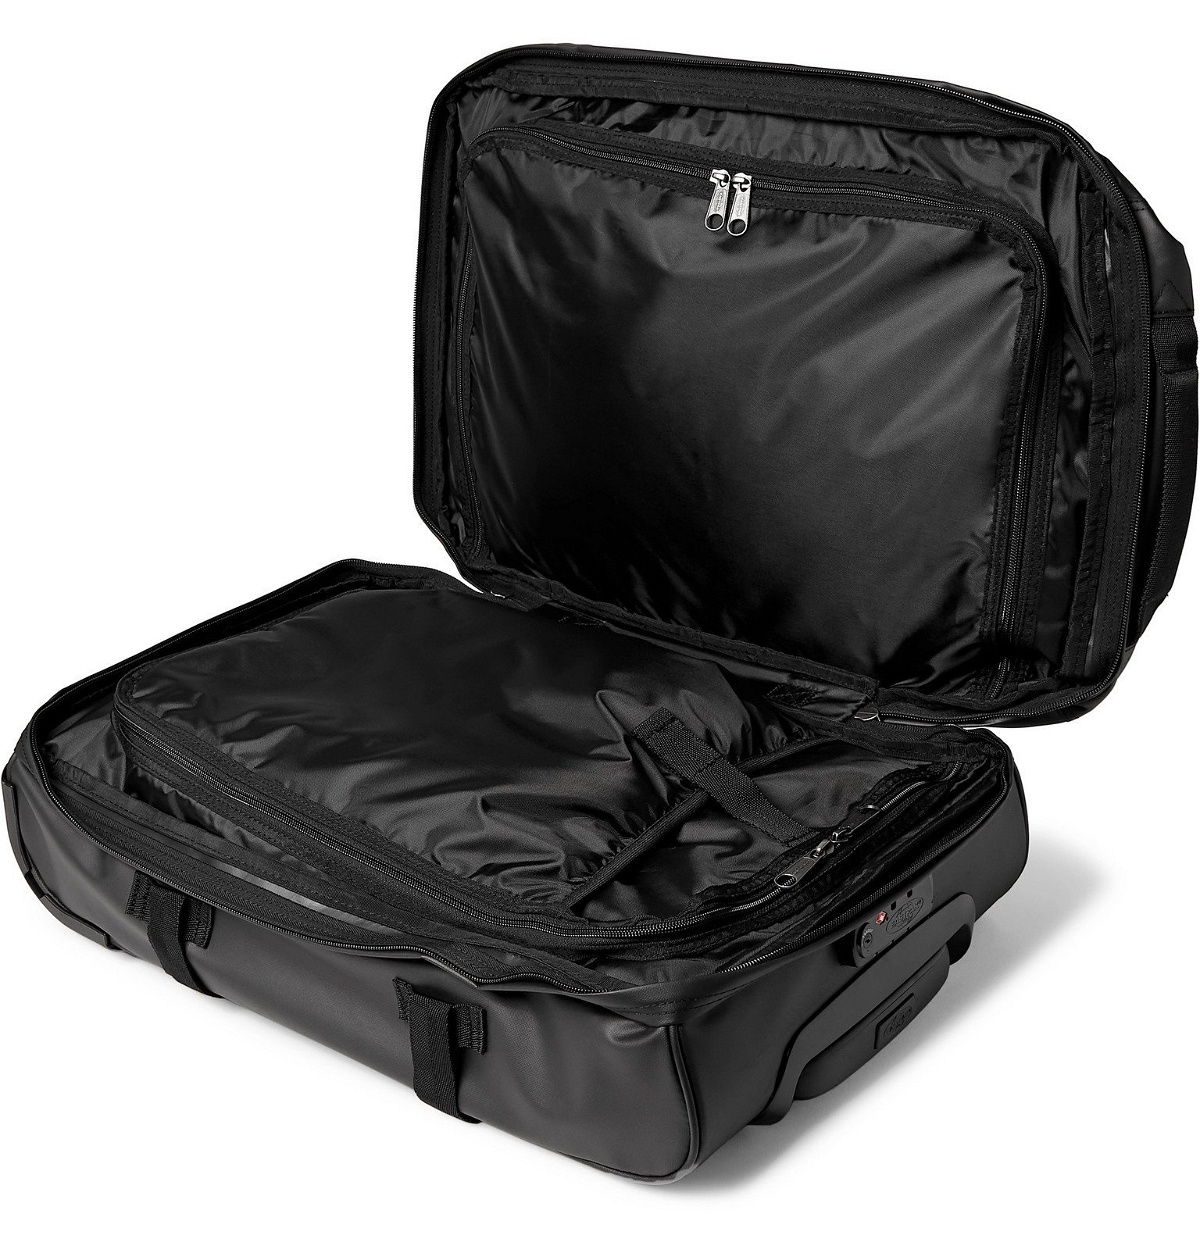 Eastpak Tranverz S Carry-On Luggage